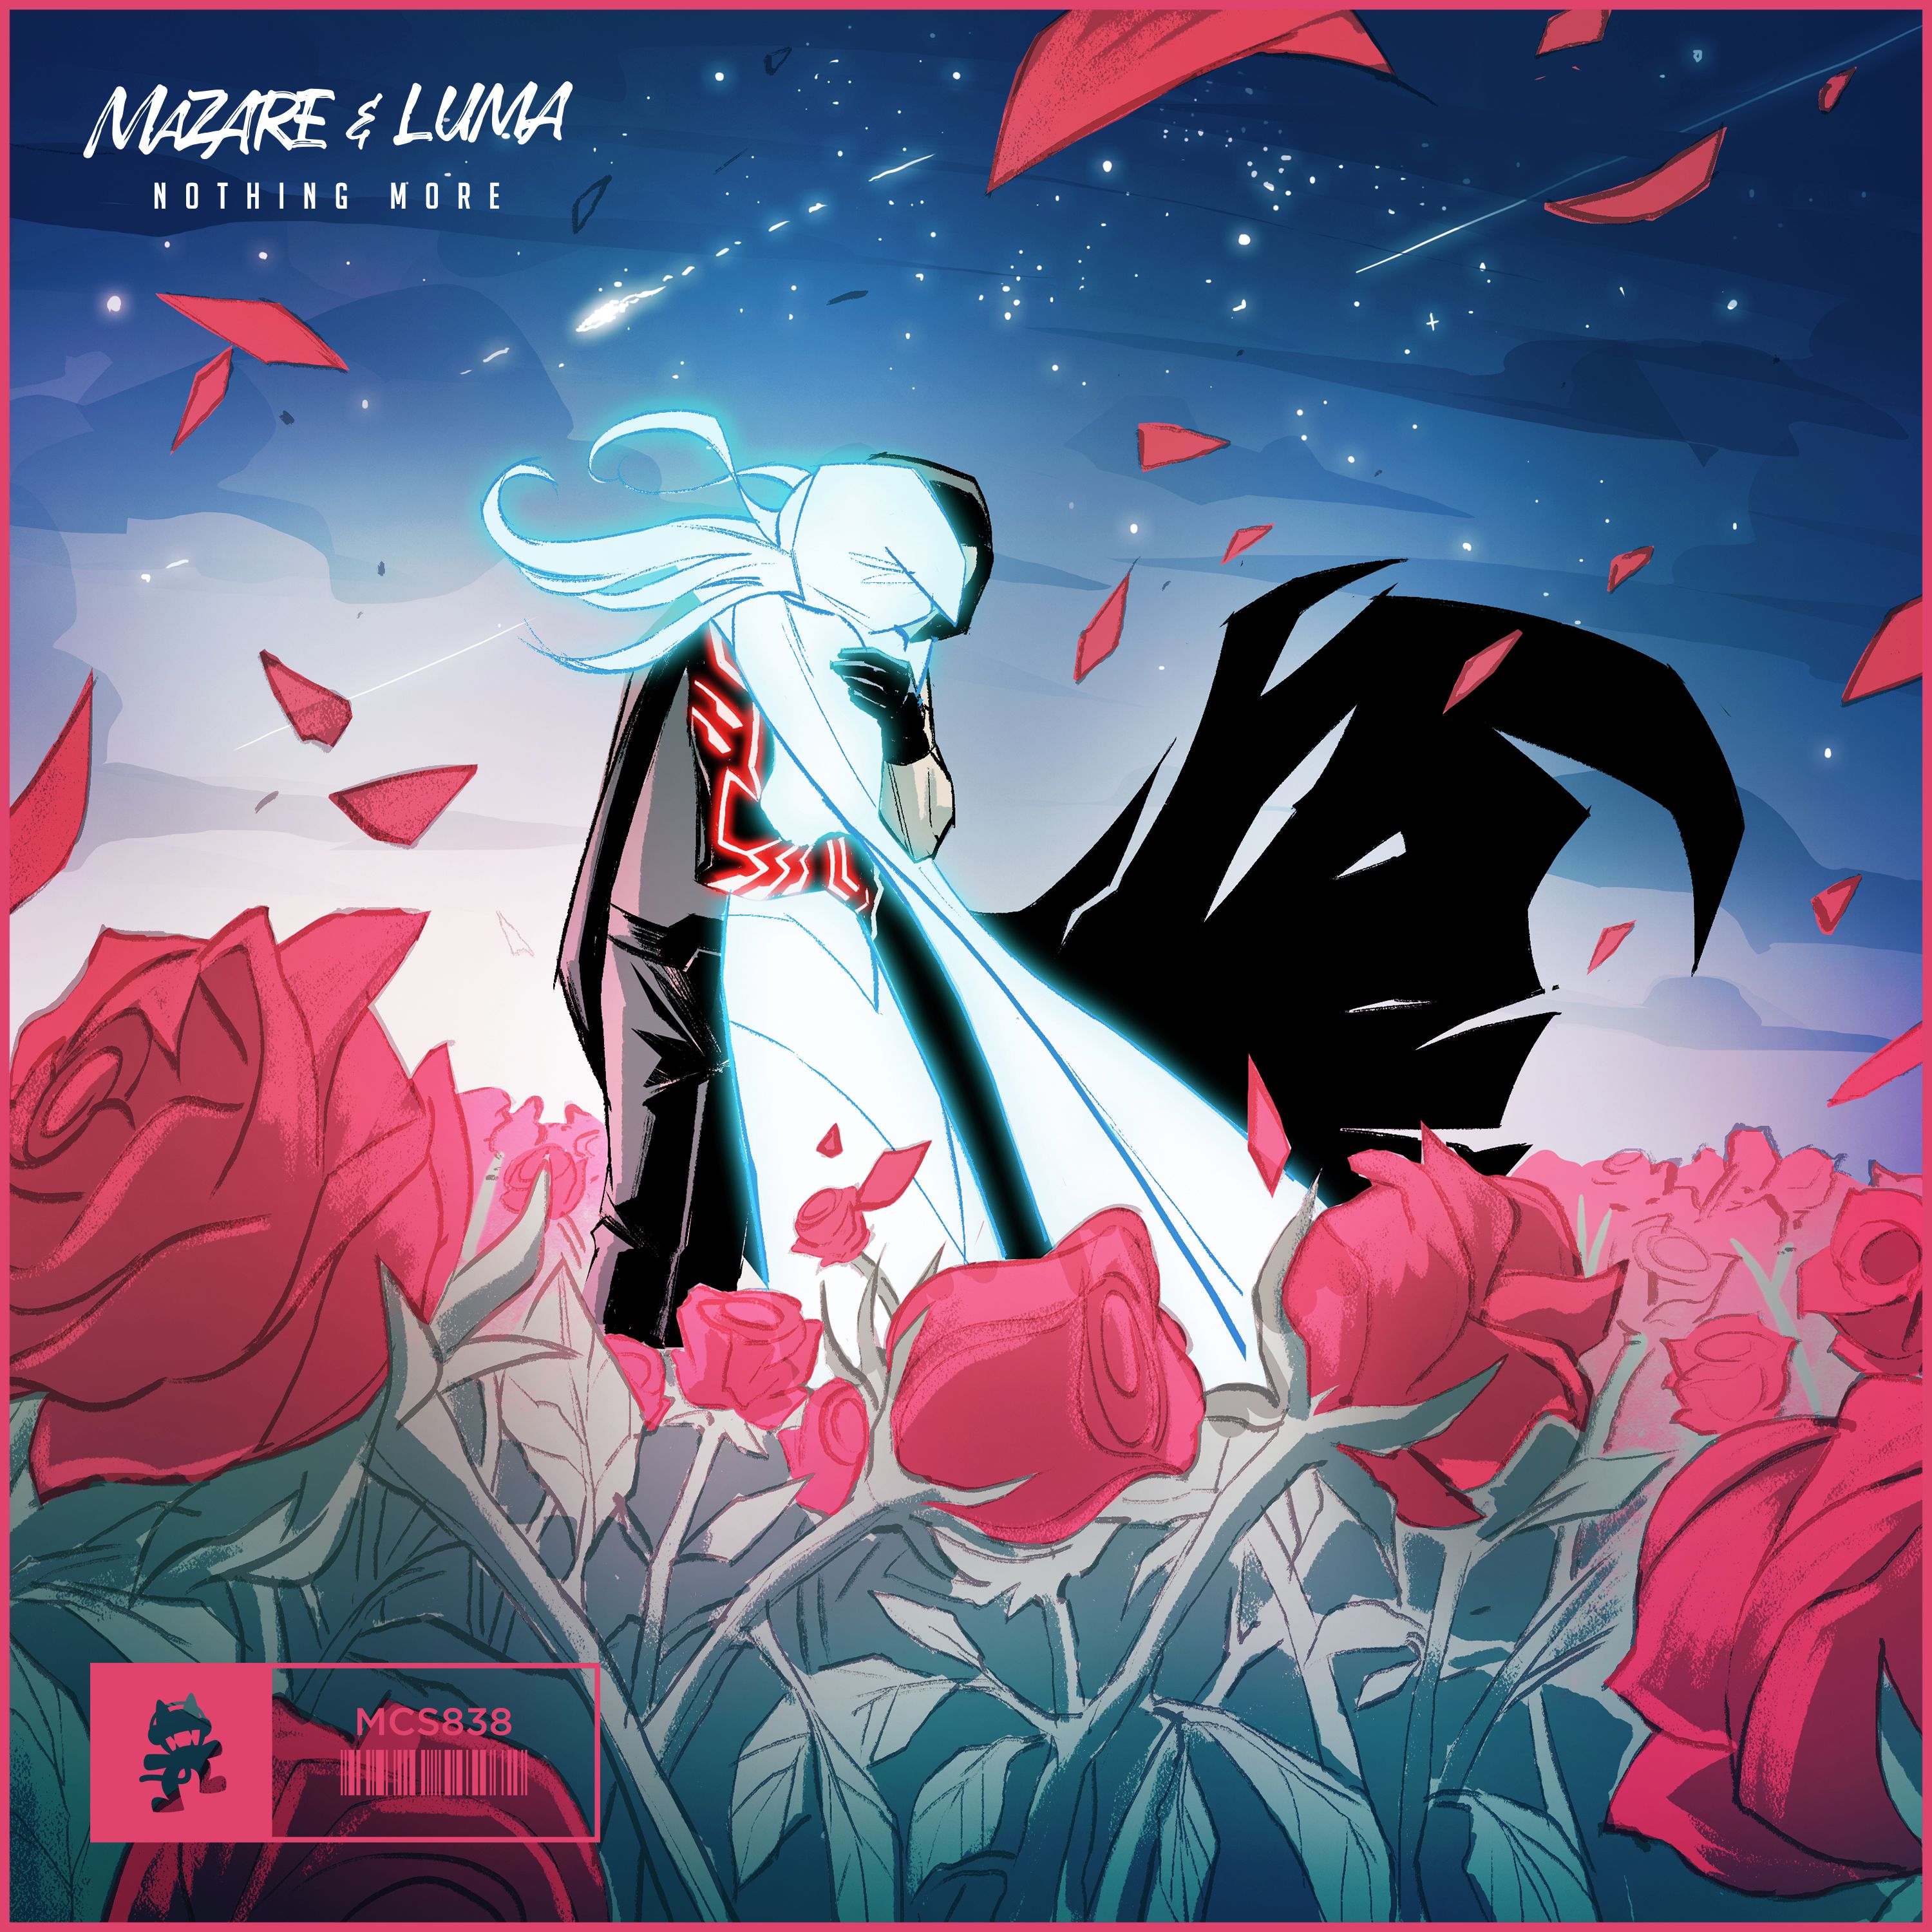 Mazare & Luma - Nothing More